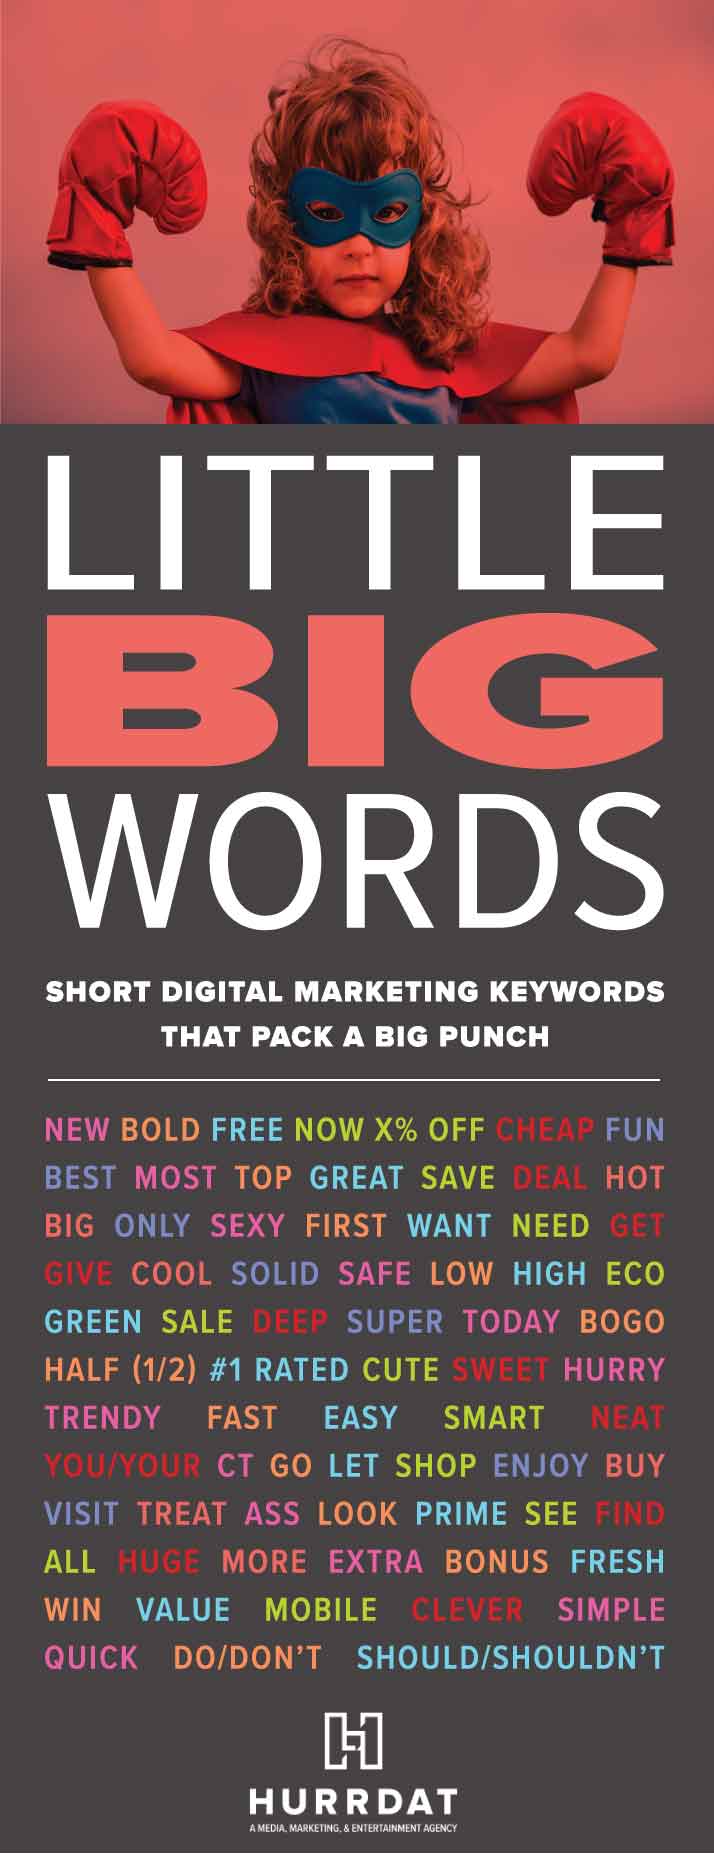 Little Big Words keywords infographic